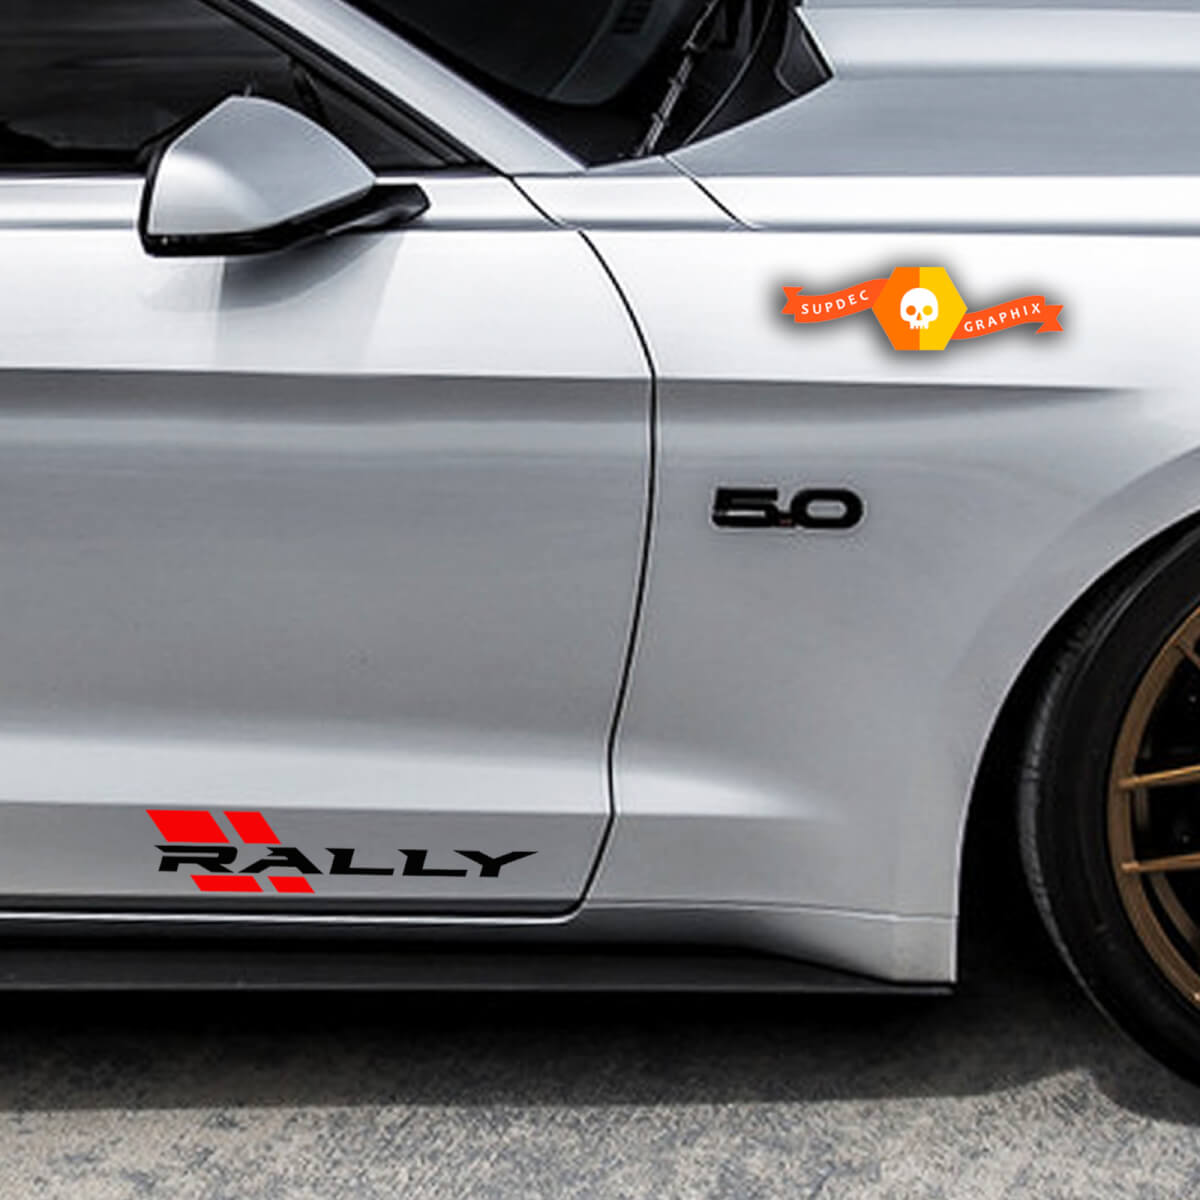 RALLY RACING Sport Performance Car Truck SUV Vinyl Decal sticker emblem 2pc Pair